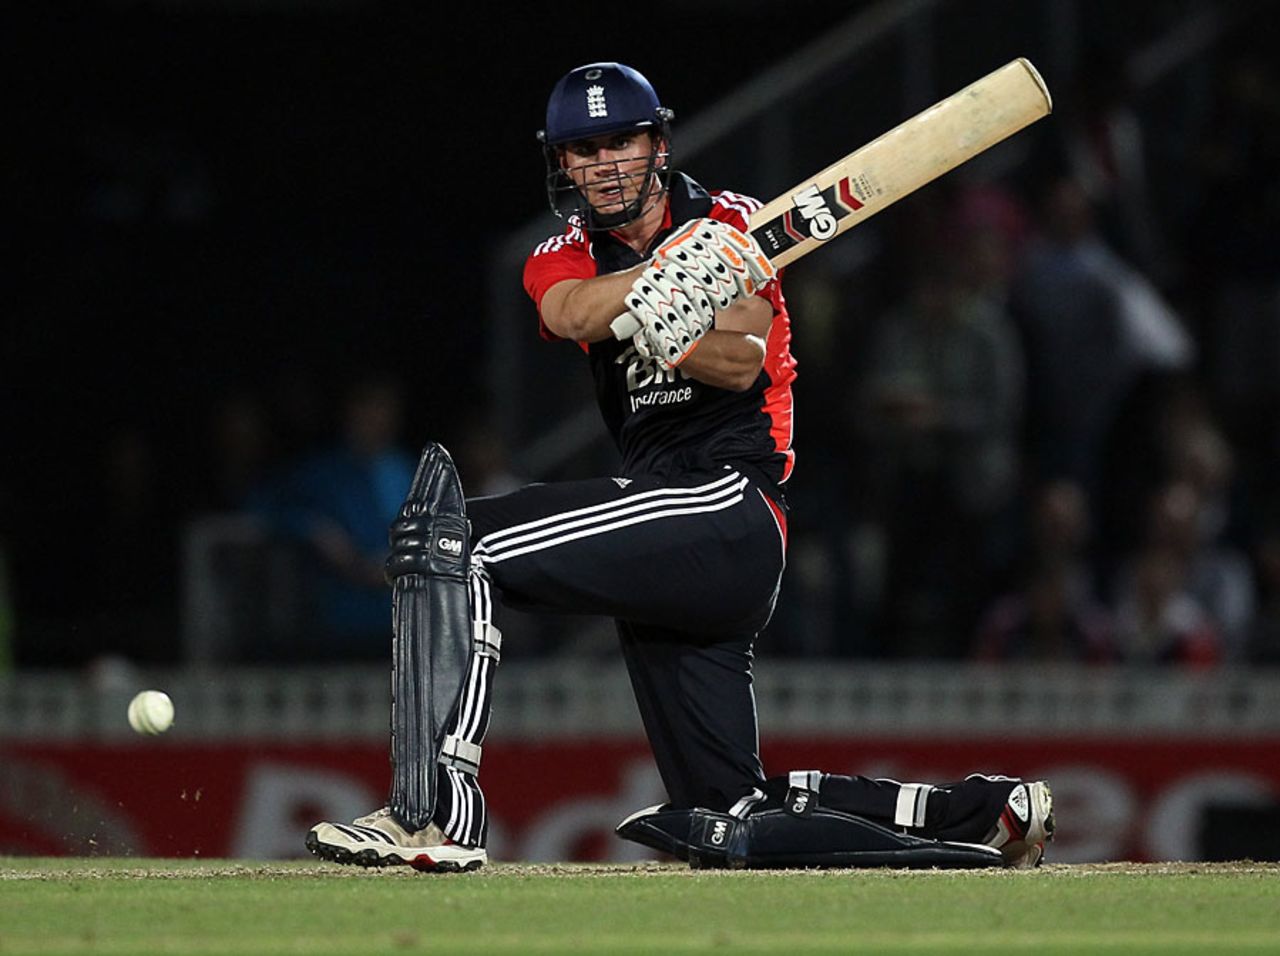 Alex Hales' first international half-century helped England cruise to their target, England v West Indies, 1st Twenty20, The Oval, September 23, 2011